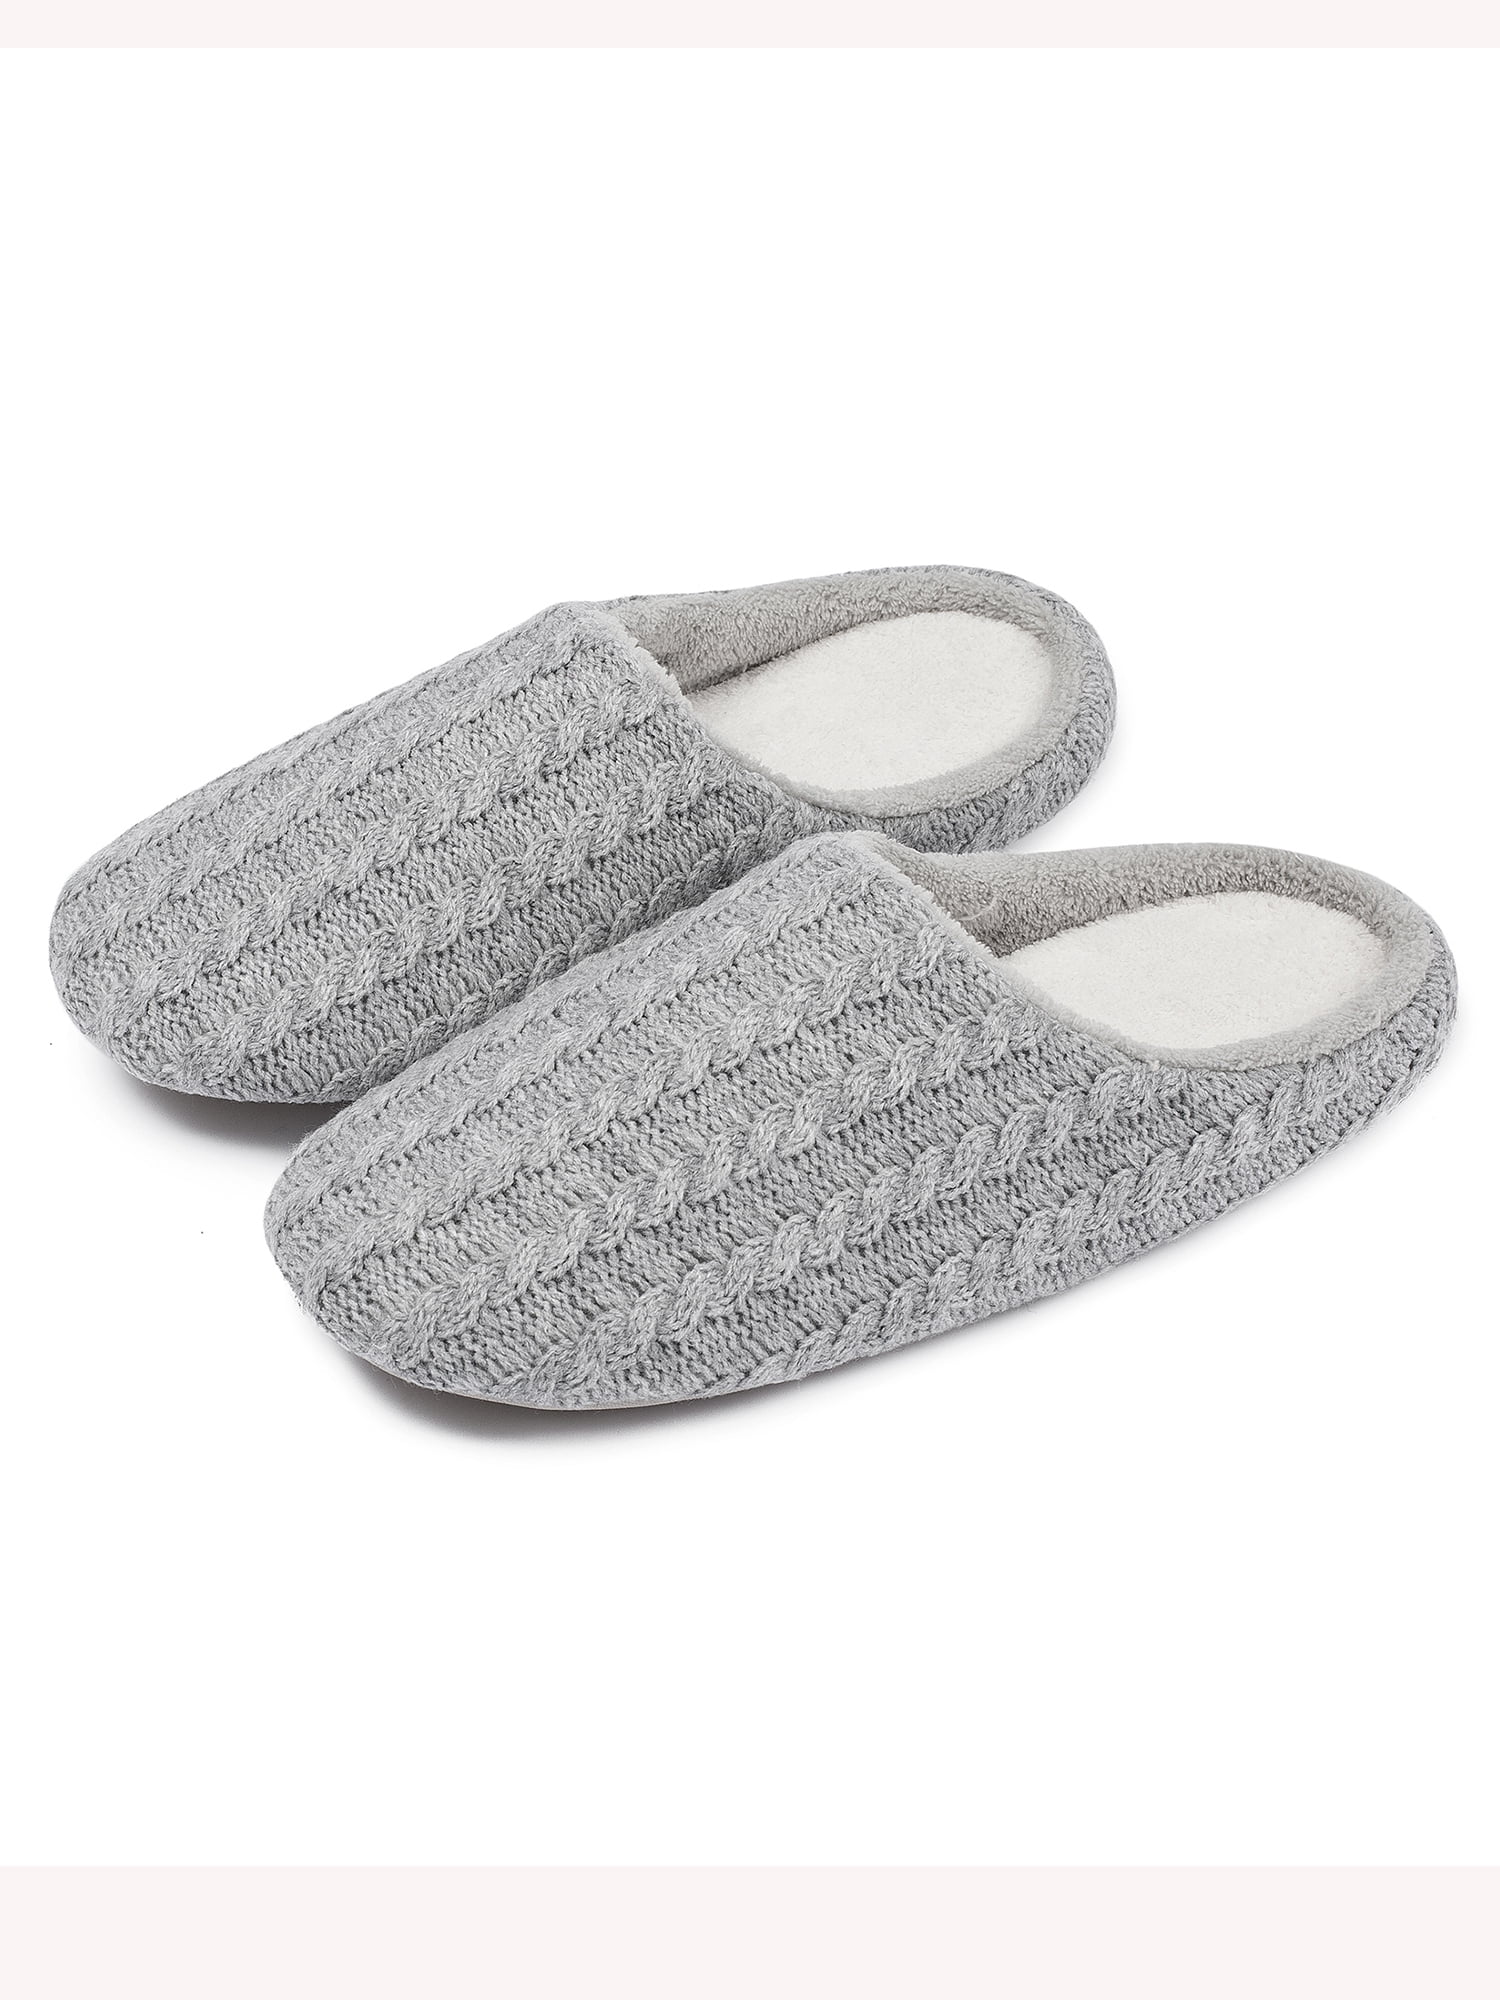 women's slippers without memory foam